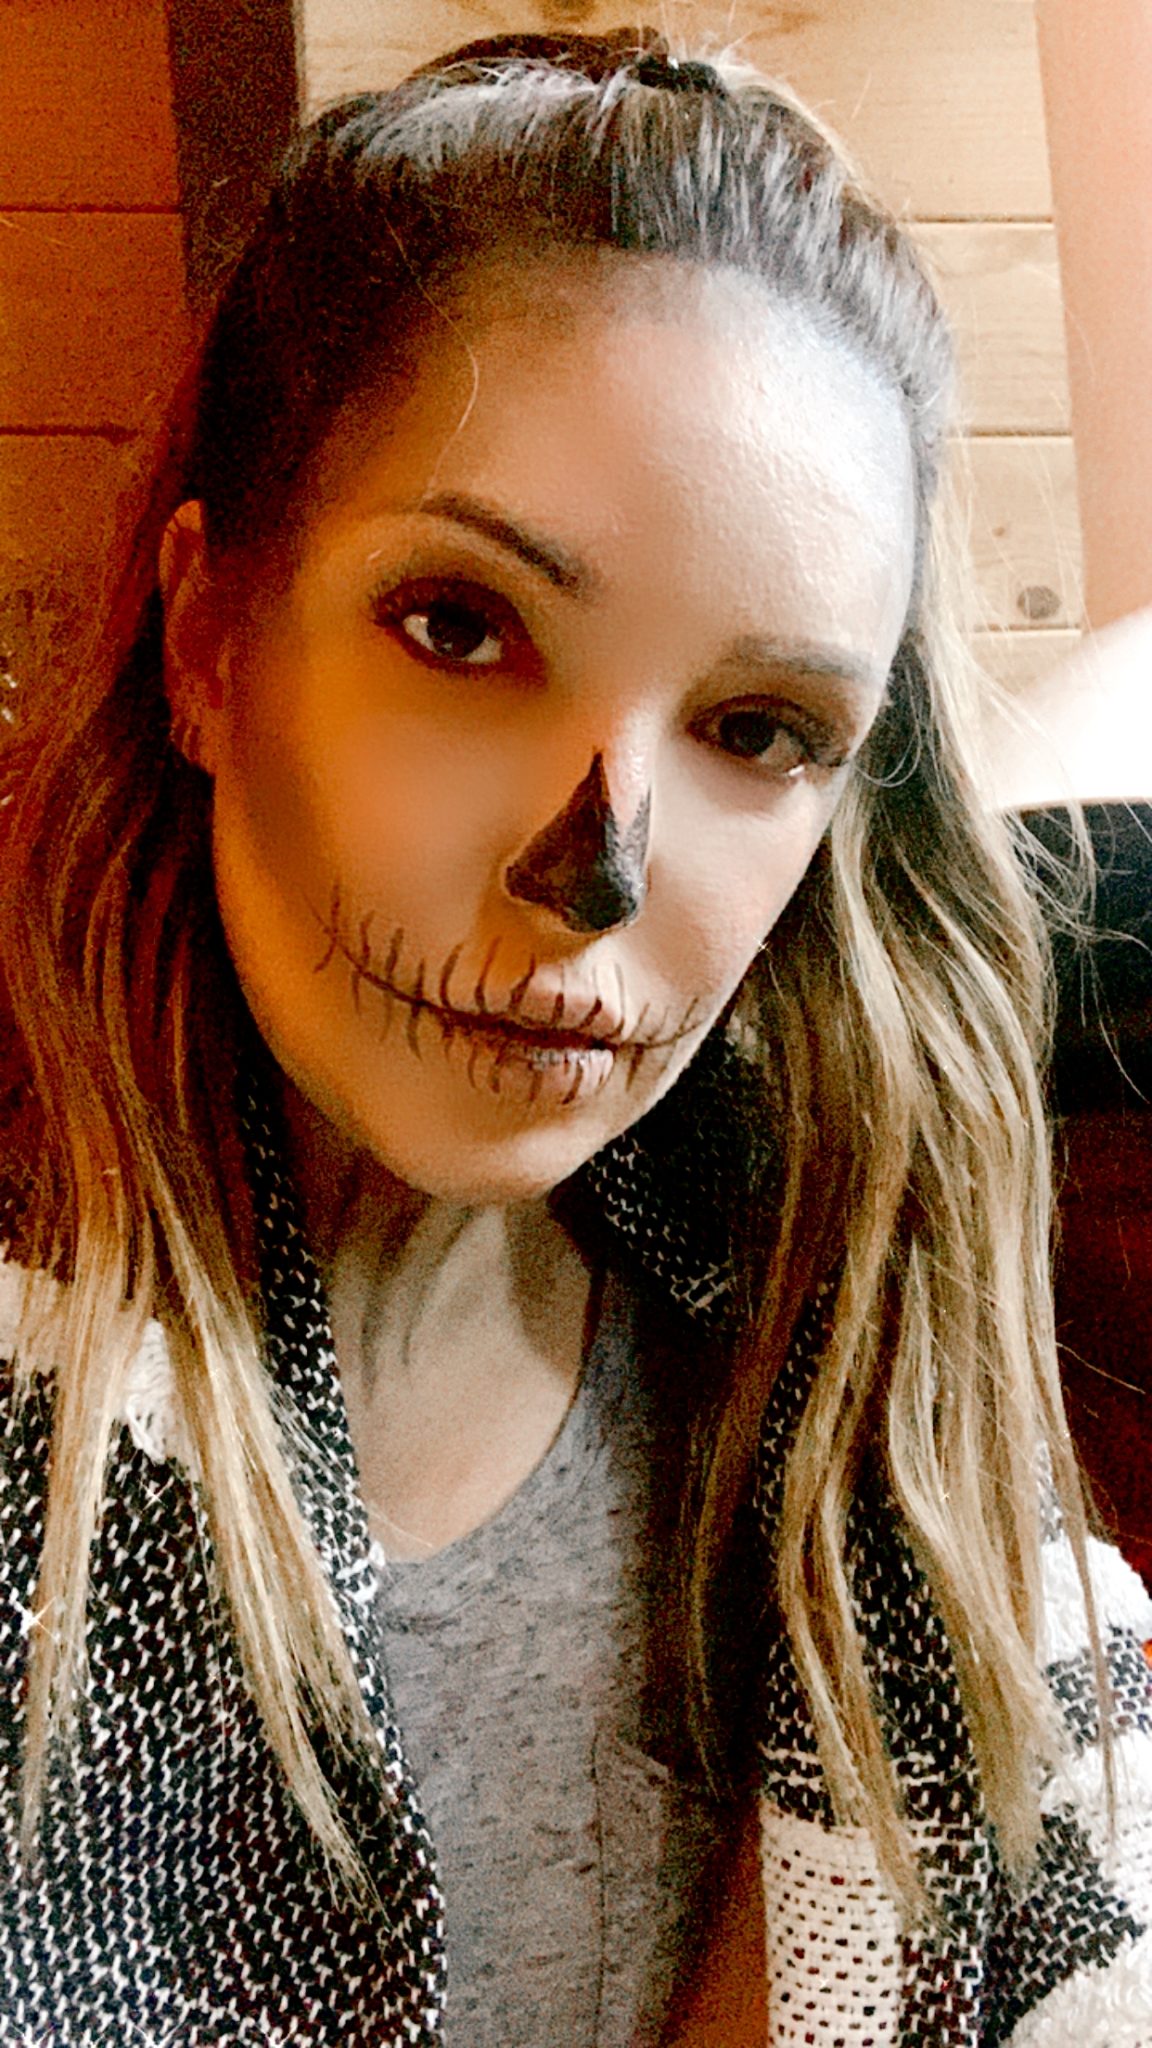 diy halloween skeleton makeup